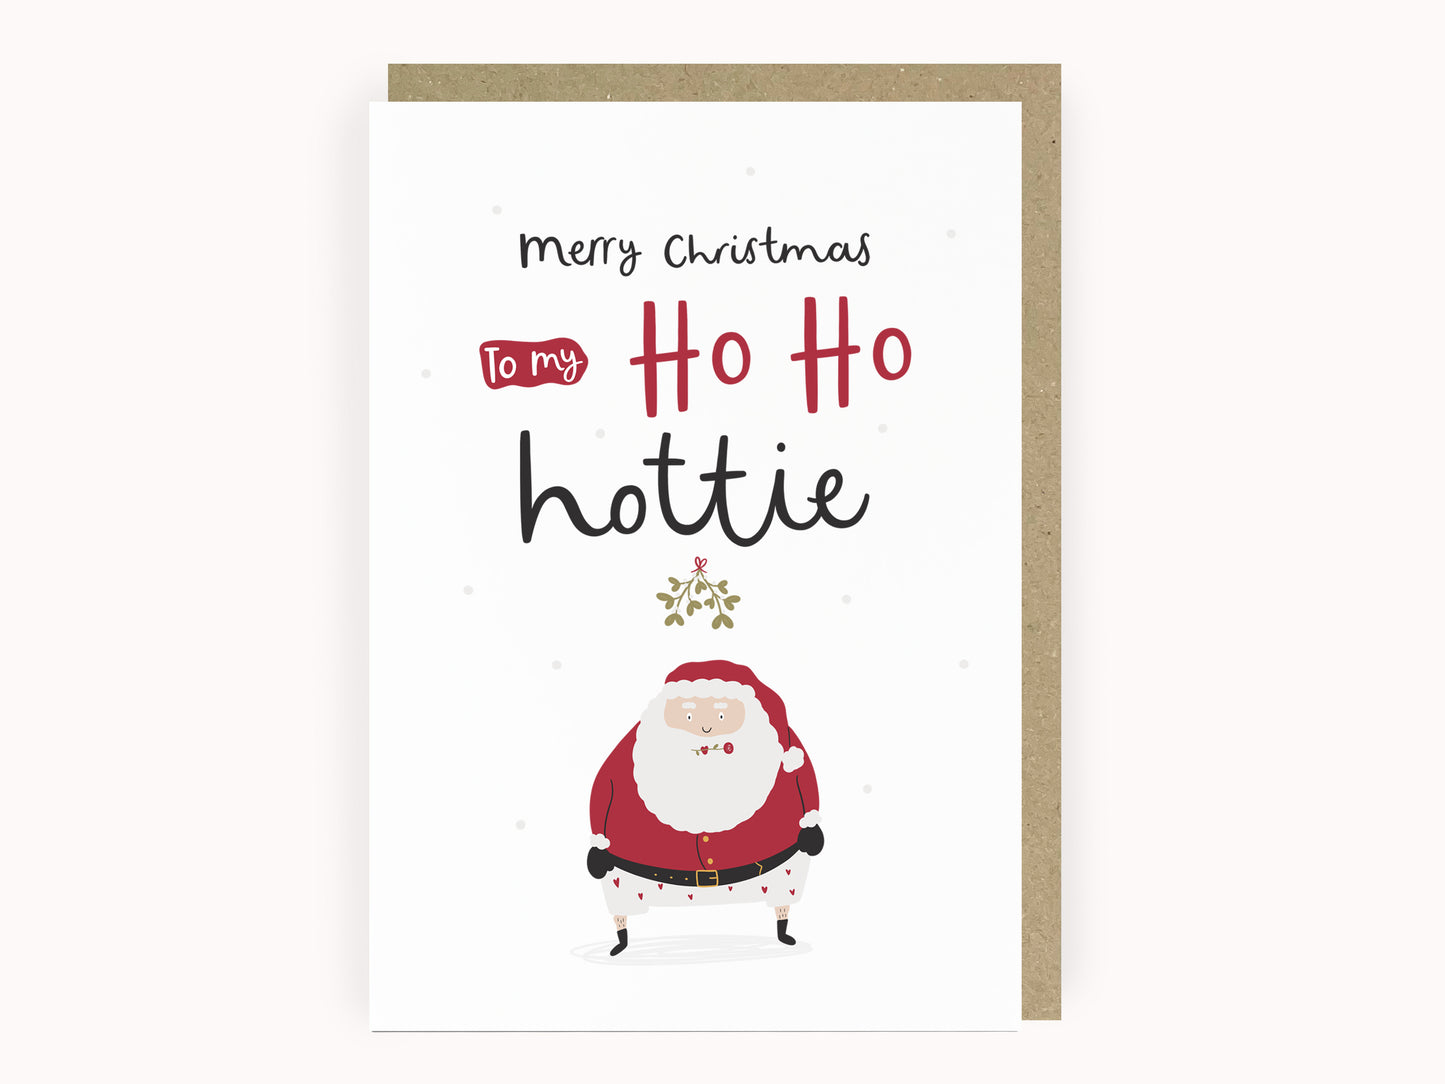 Ho ho hottie funny christmas card by abbie imagine